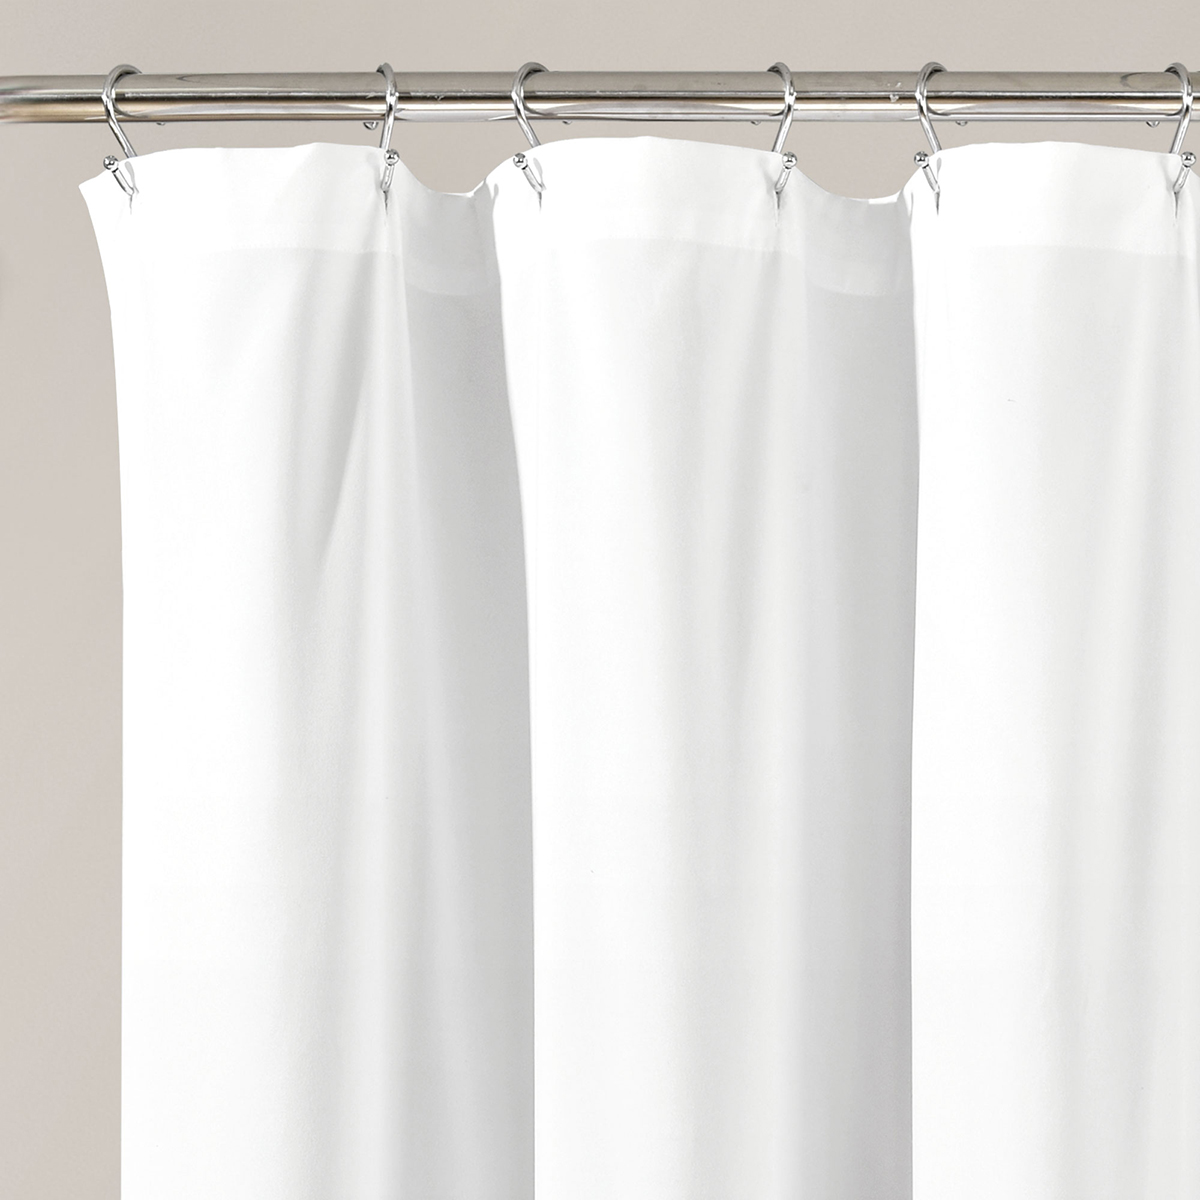 Lush Decor(R) Avery Shower Curtain